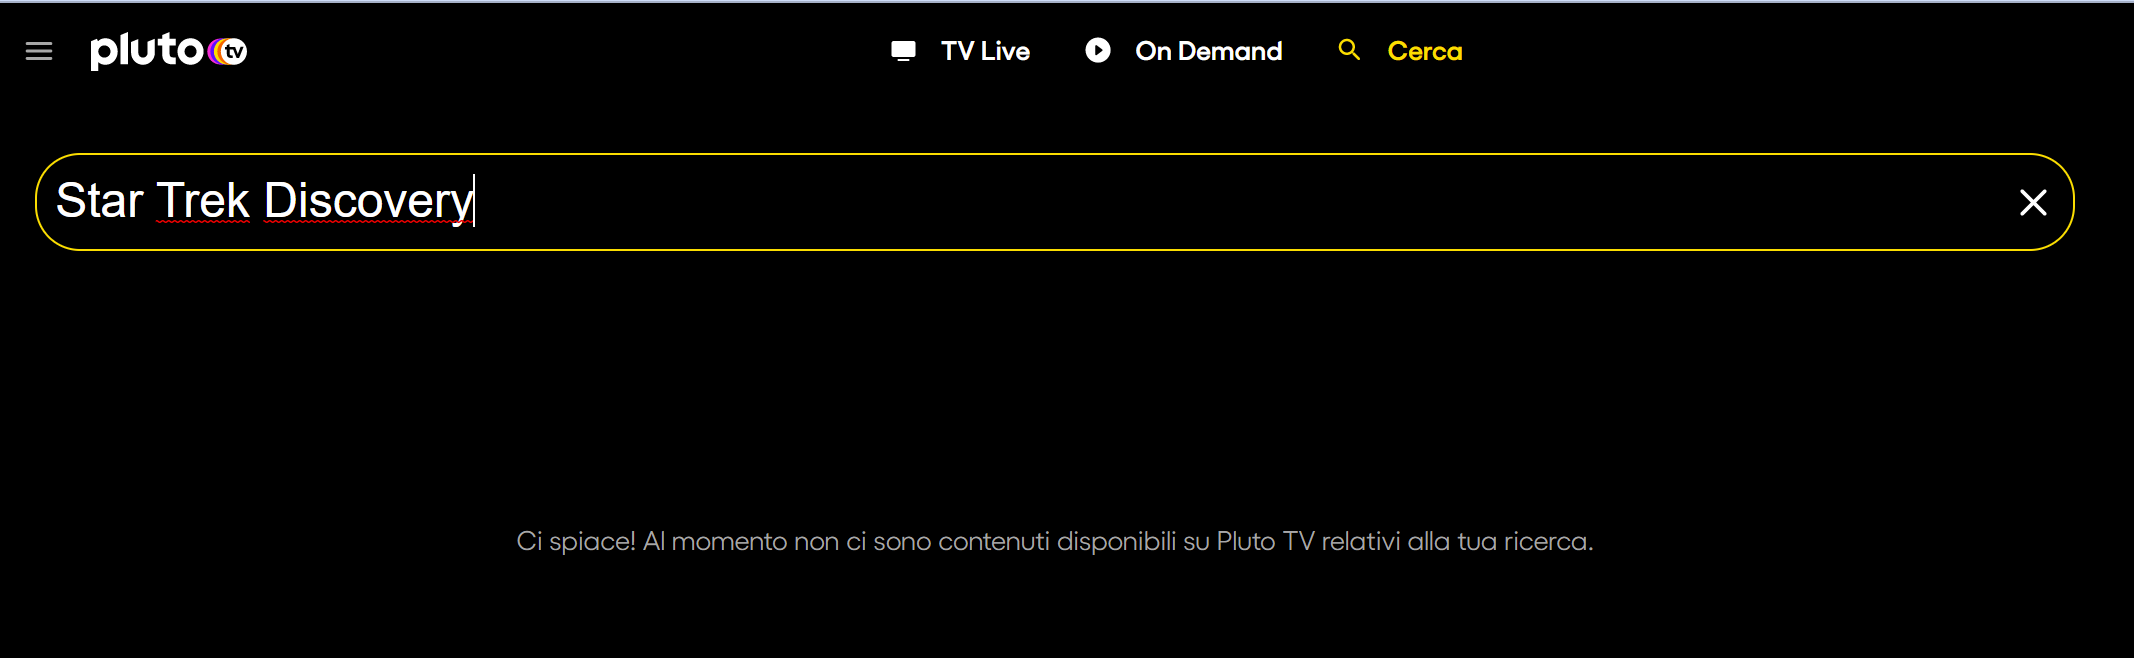 Pluto TV star trek discovery italia